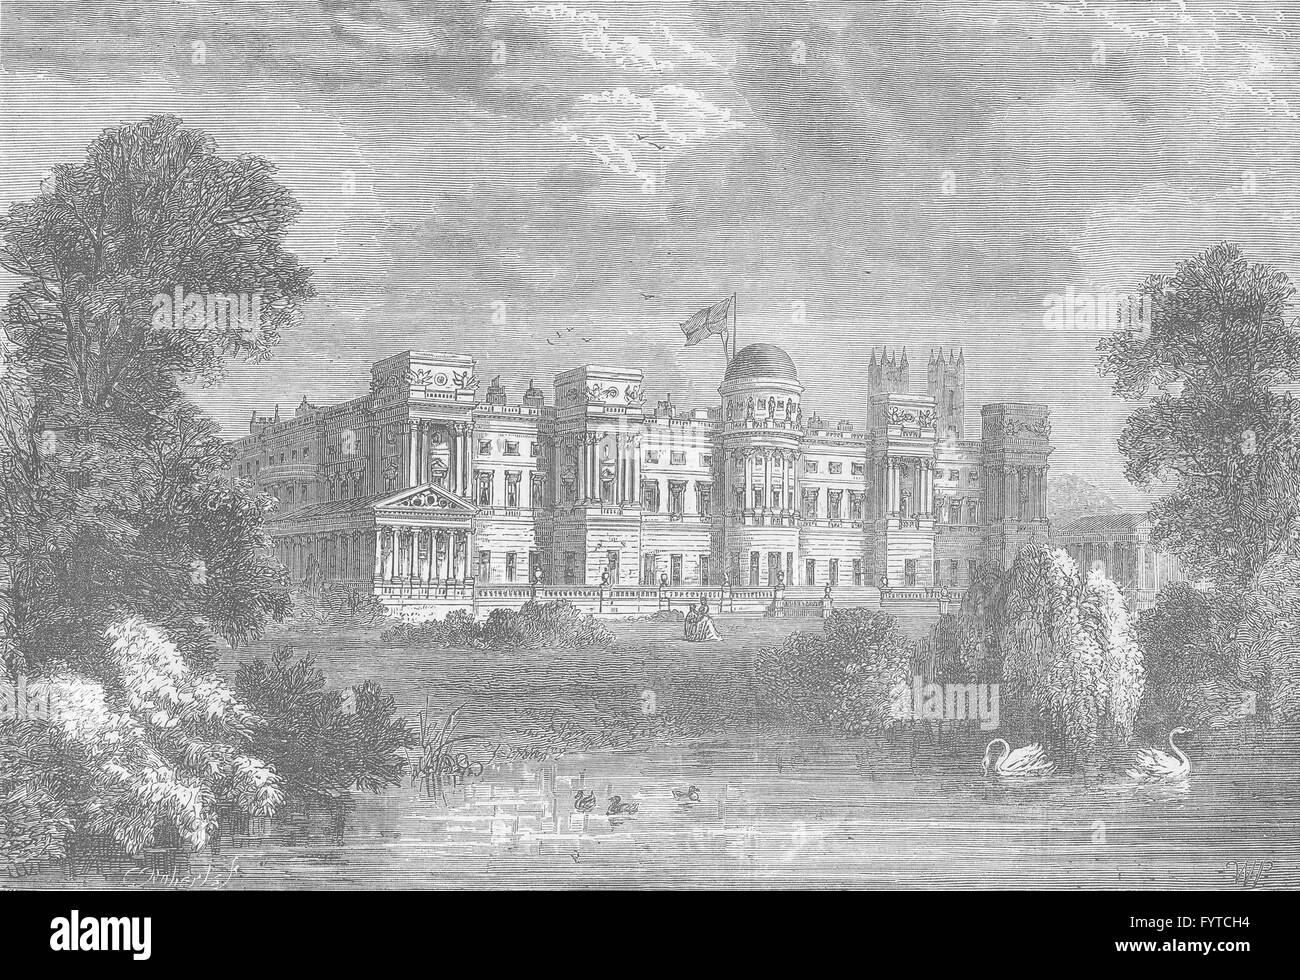 BUCKINGHAM PALACE: Buckingham Palace: Garden front. London, old print c1880 Stock Photo